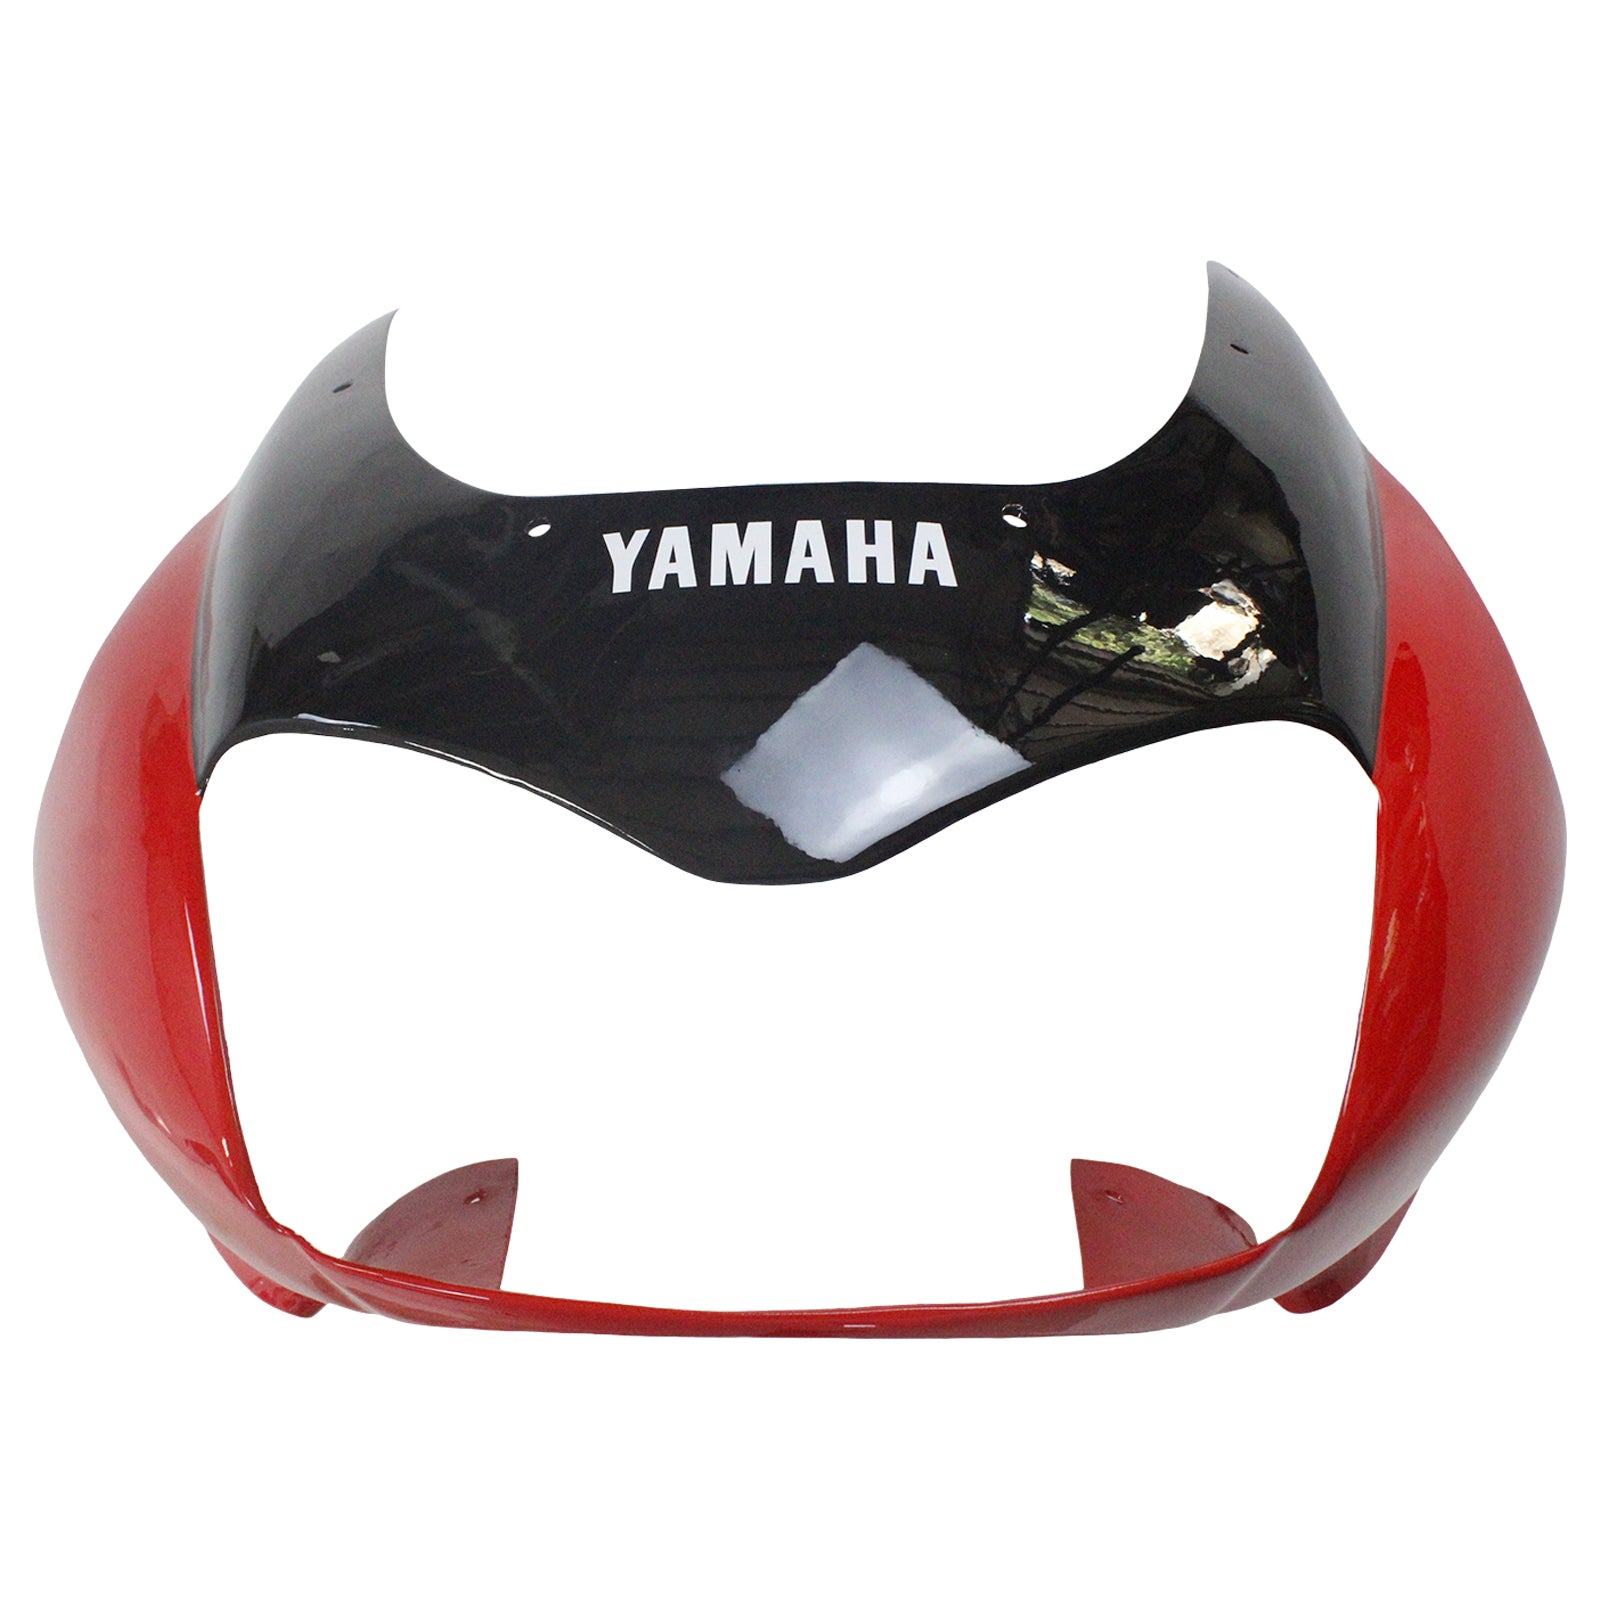 Amotopart 1997–2007 Yamaha YZF1000R Thunderace Verkleidung, Rot und Schwarz, Style5-Kit